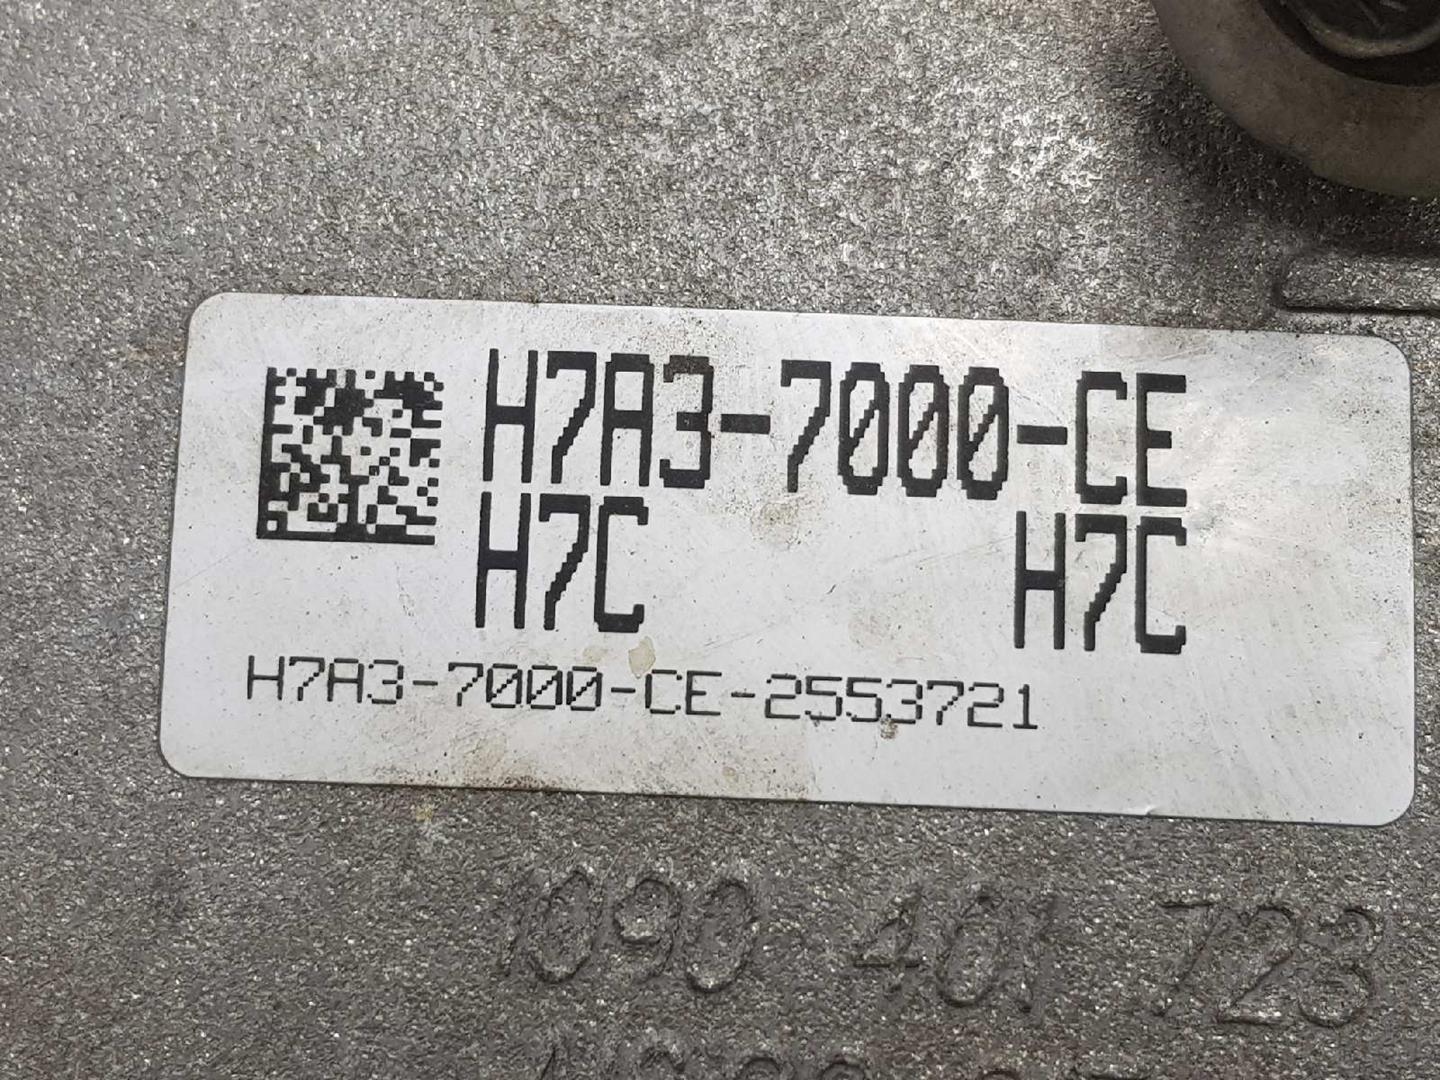 JAGUAR F-PACE (X761) (2015-present) Gearbox H7A37000CE, H7A37000CE, 8HP45 24549730